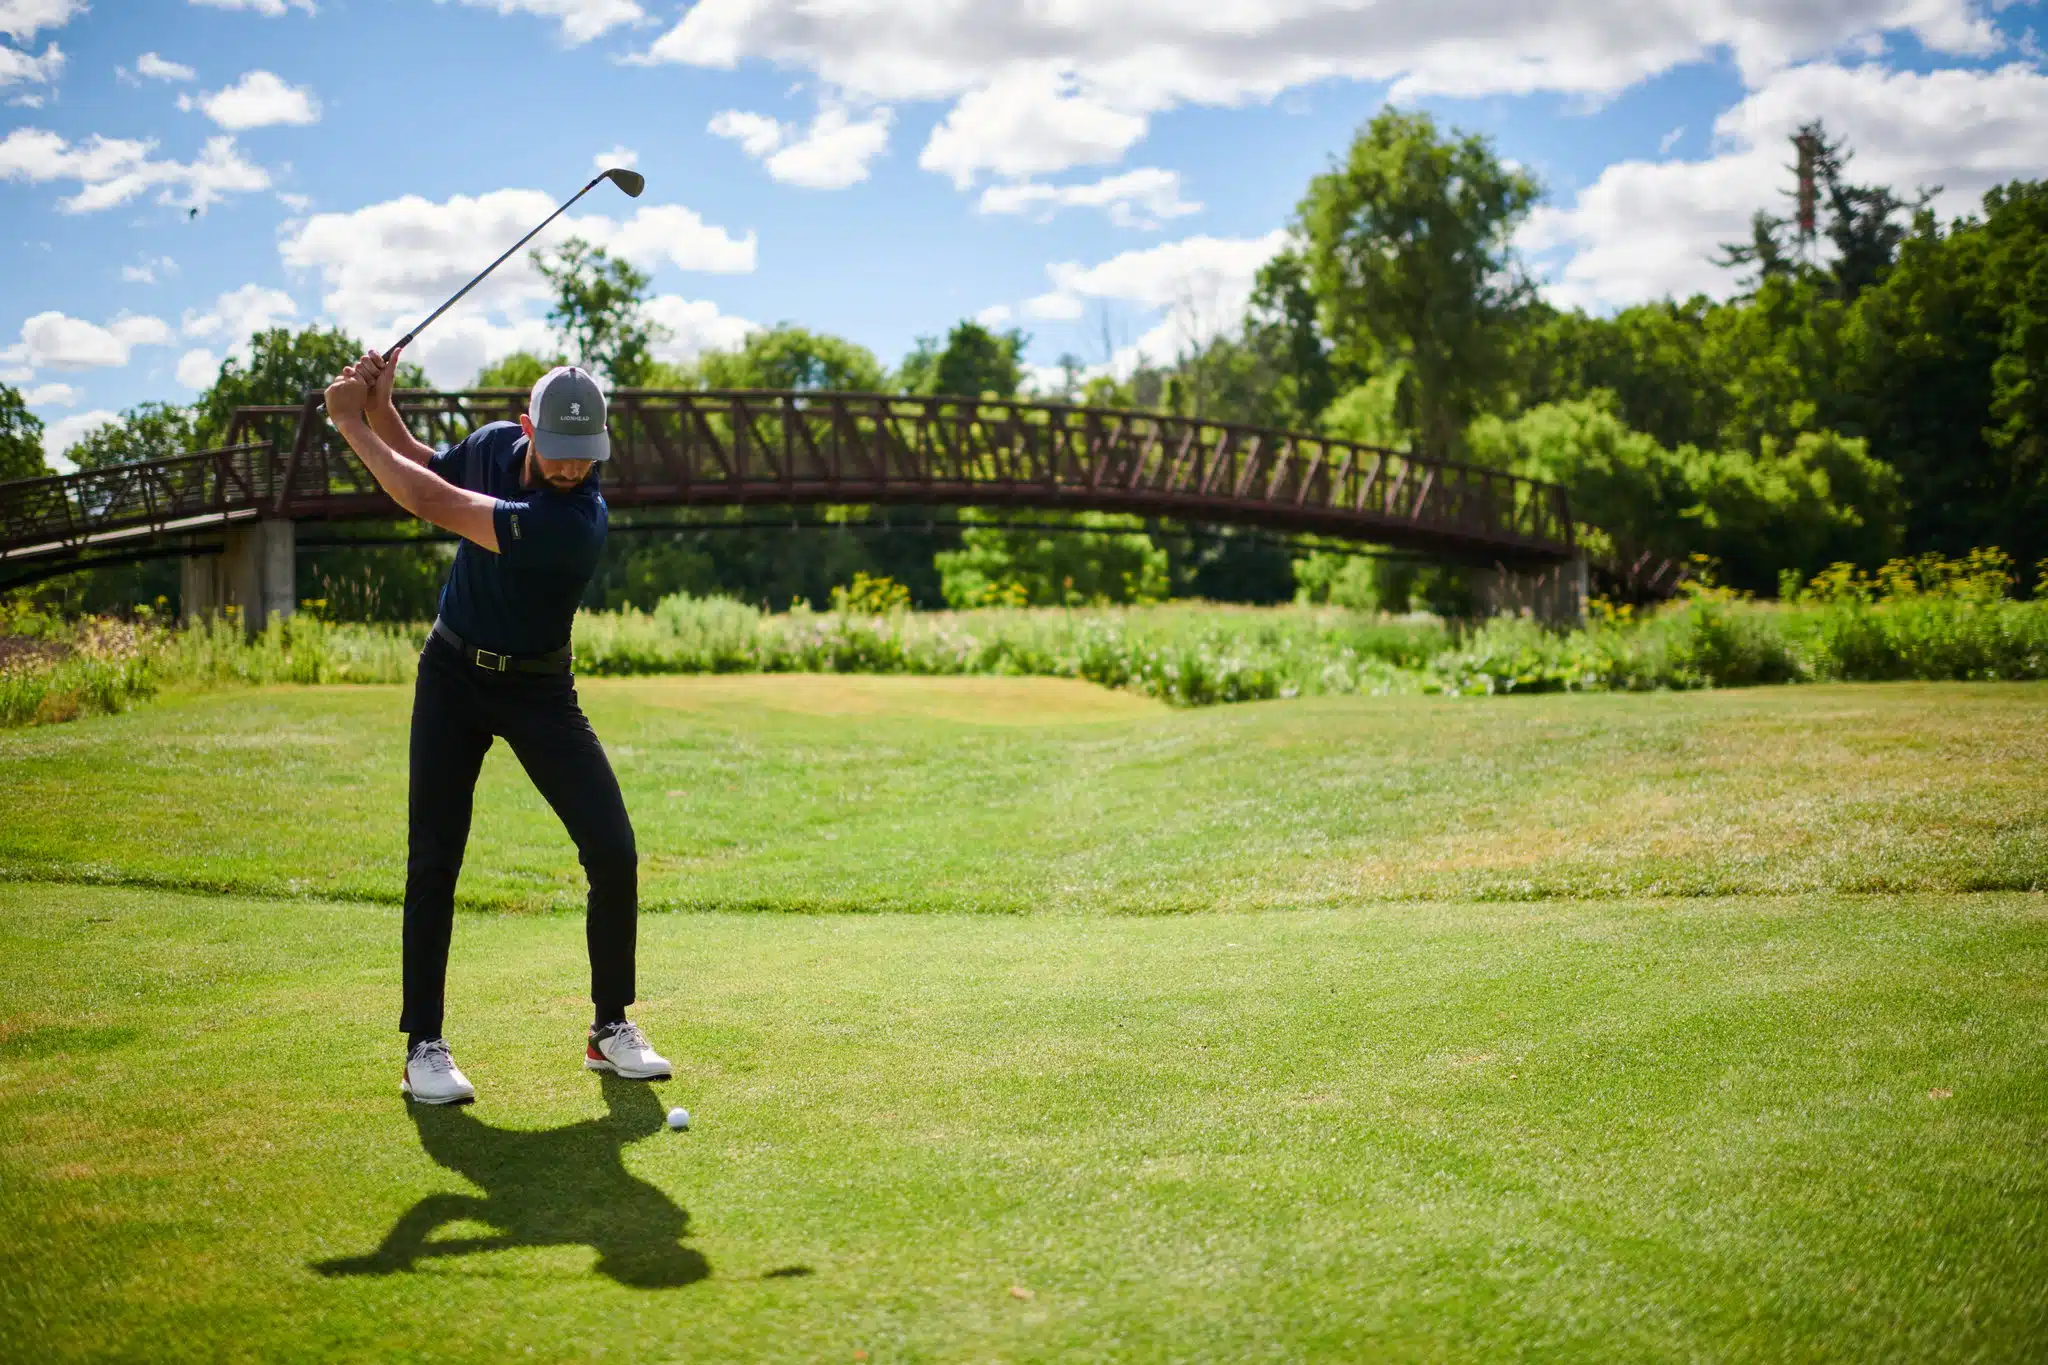 Golfer swinging club with signature bridge in background.